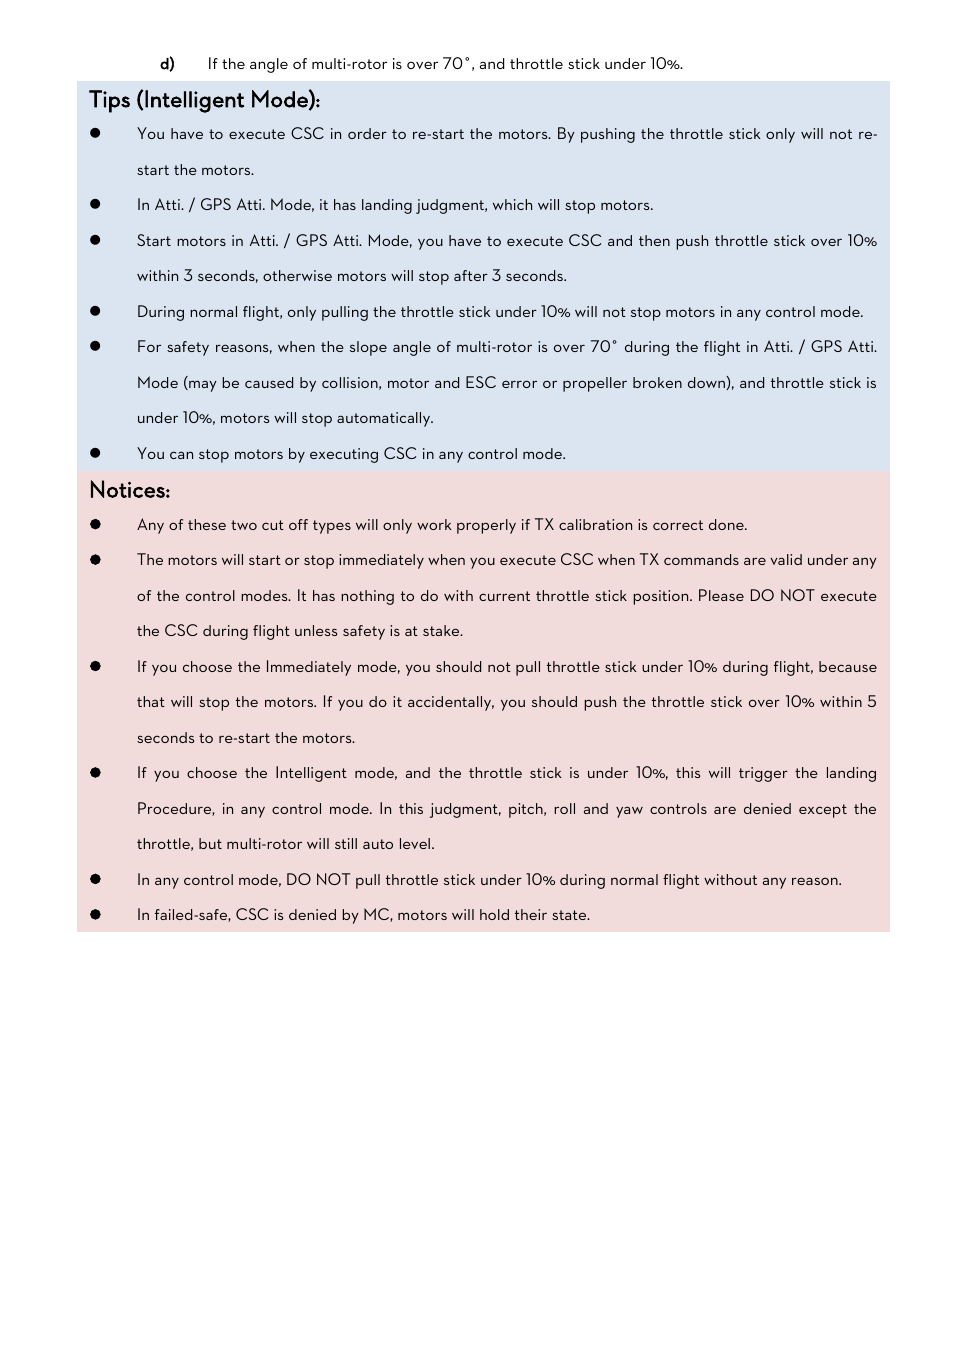 Tips (intelligent mode), Notices | DJI Naza-M Lite User Manual | Page 22 /  45 | Original mode